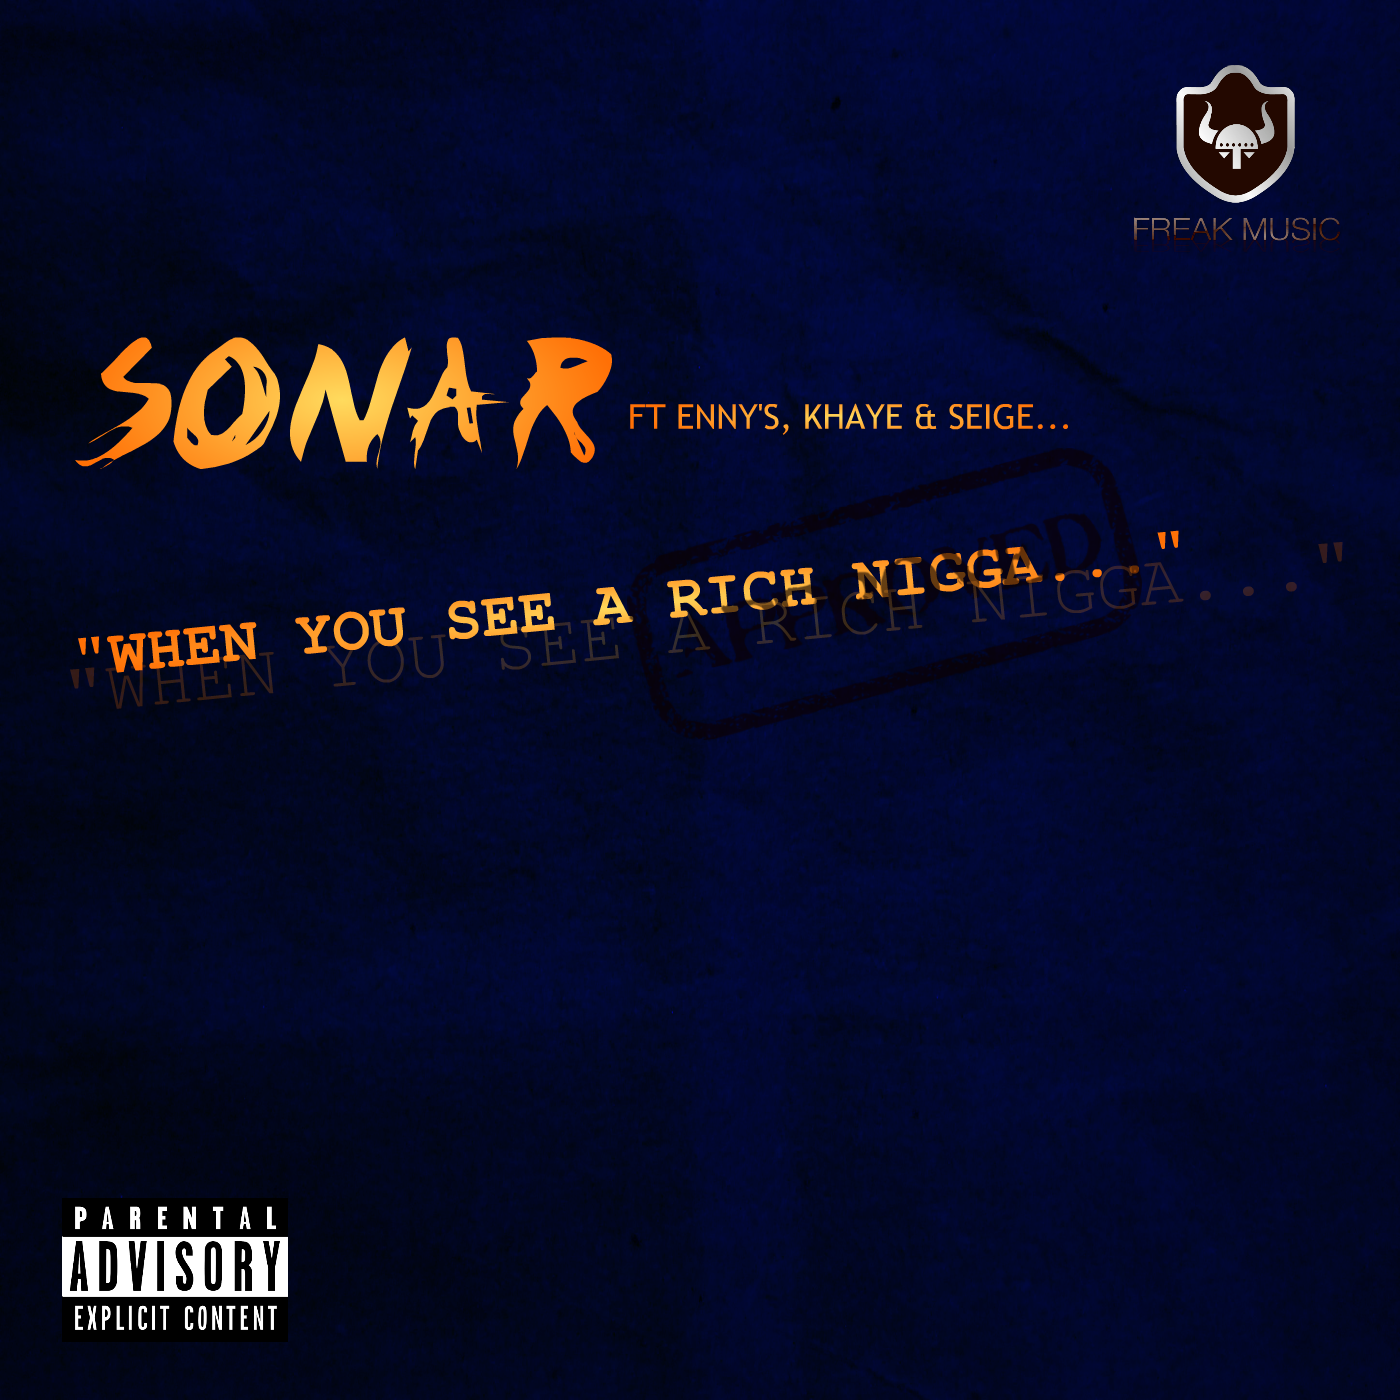 RICH NIGGA PNG - New Music!! Sonar - When you see a rich nigga